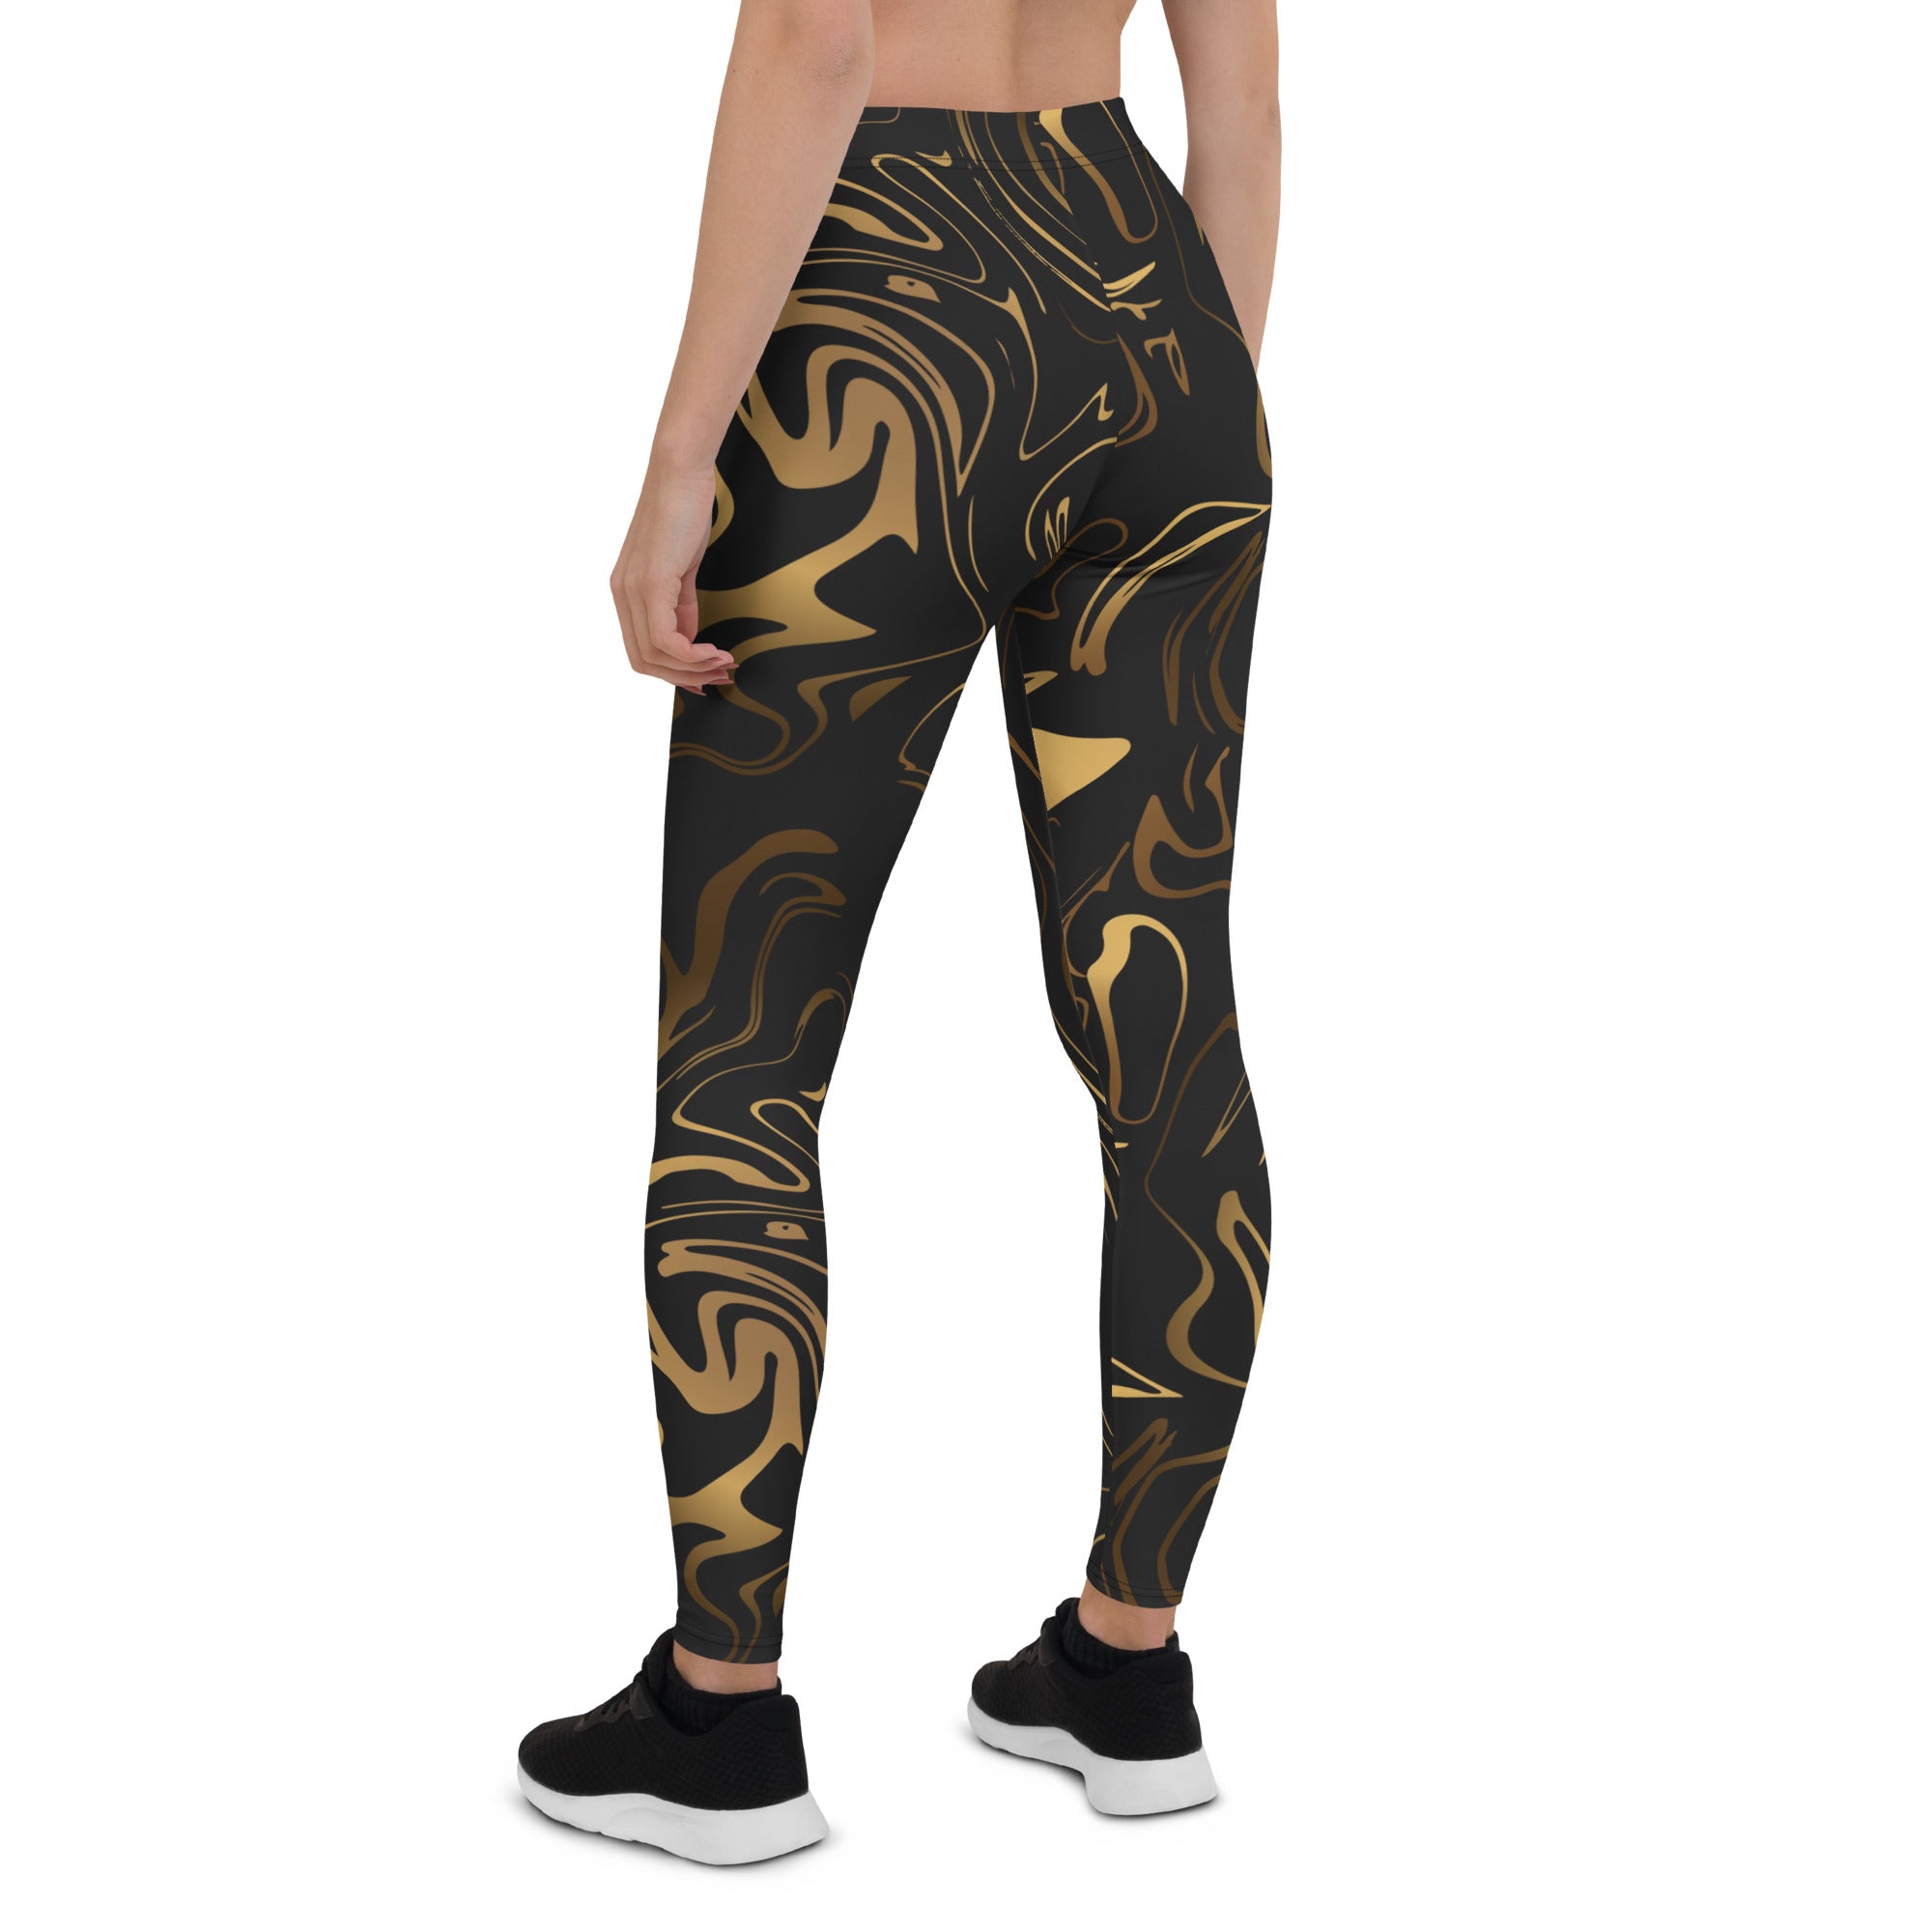 Black and gold Nike leggings